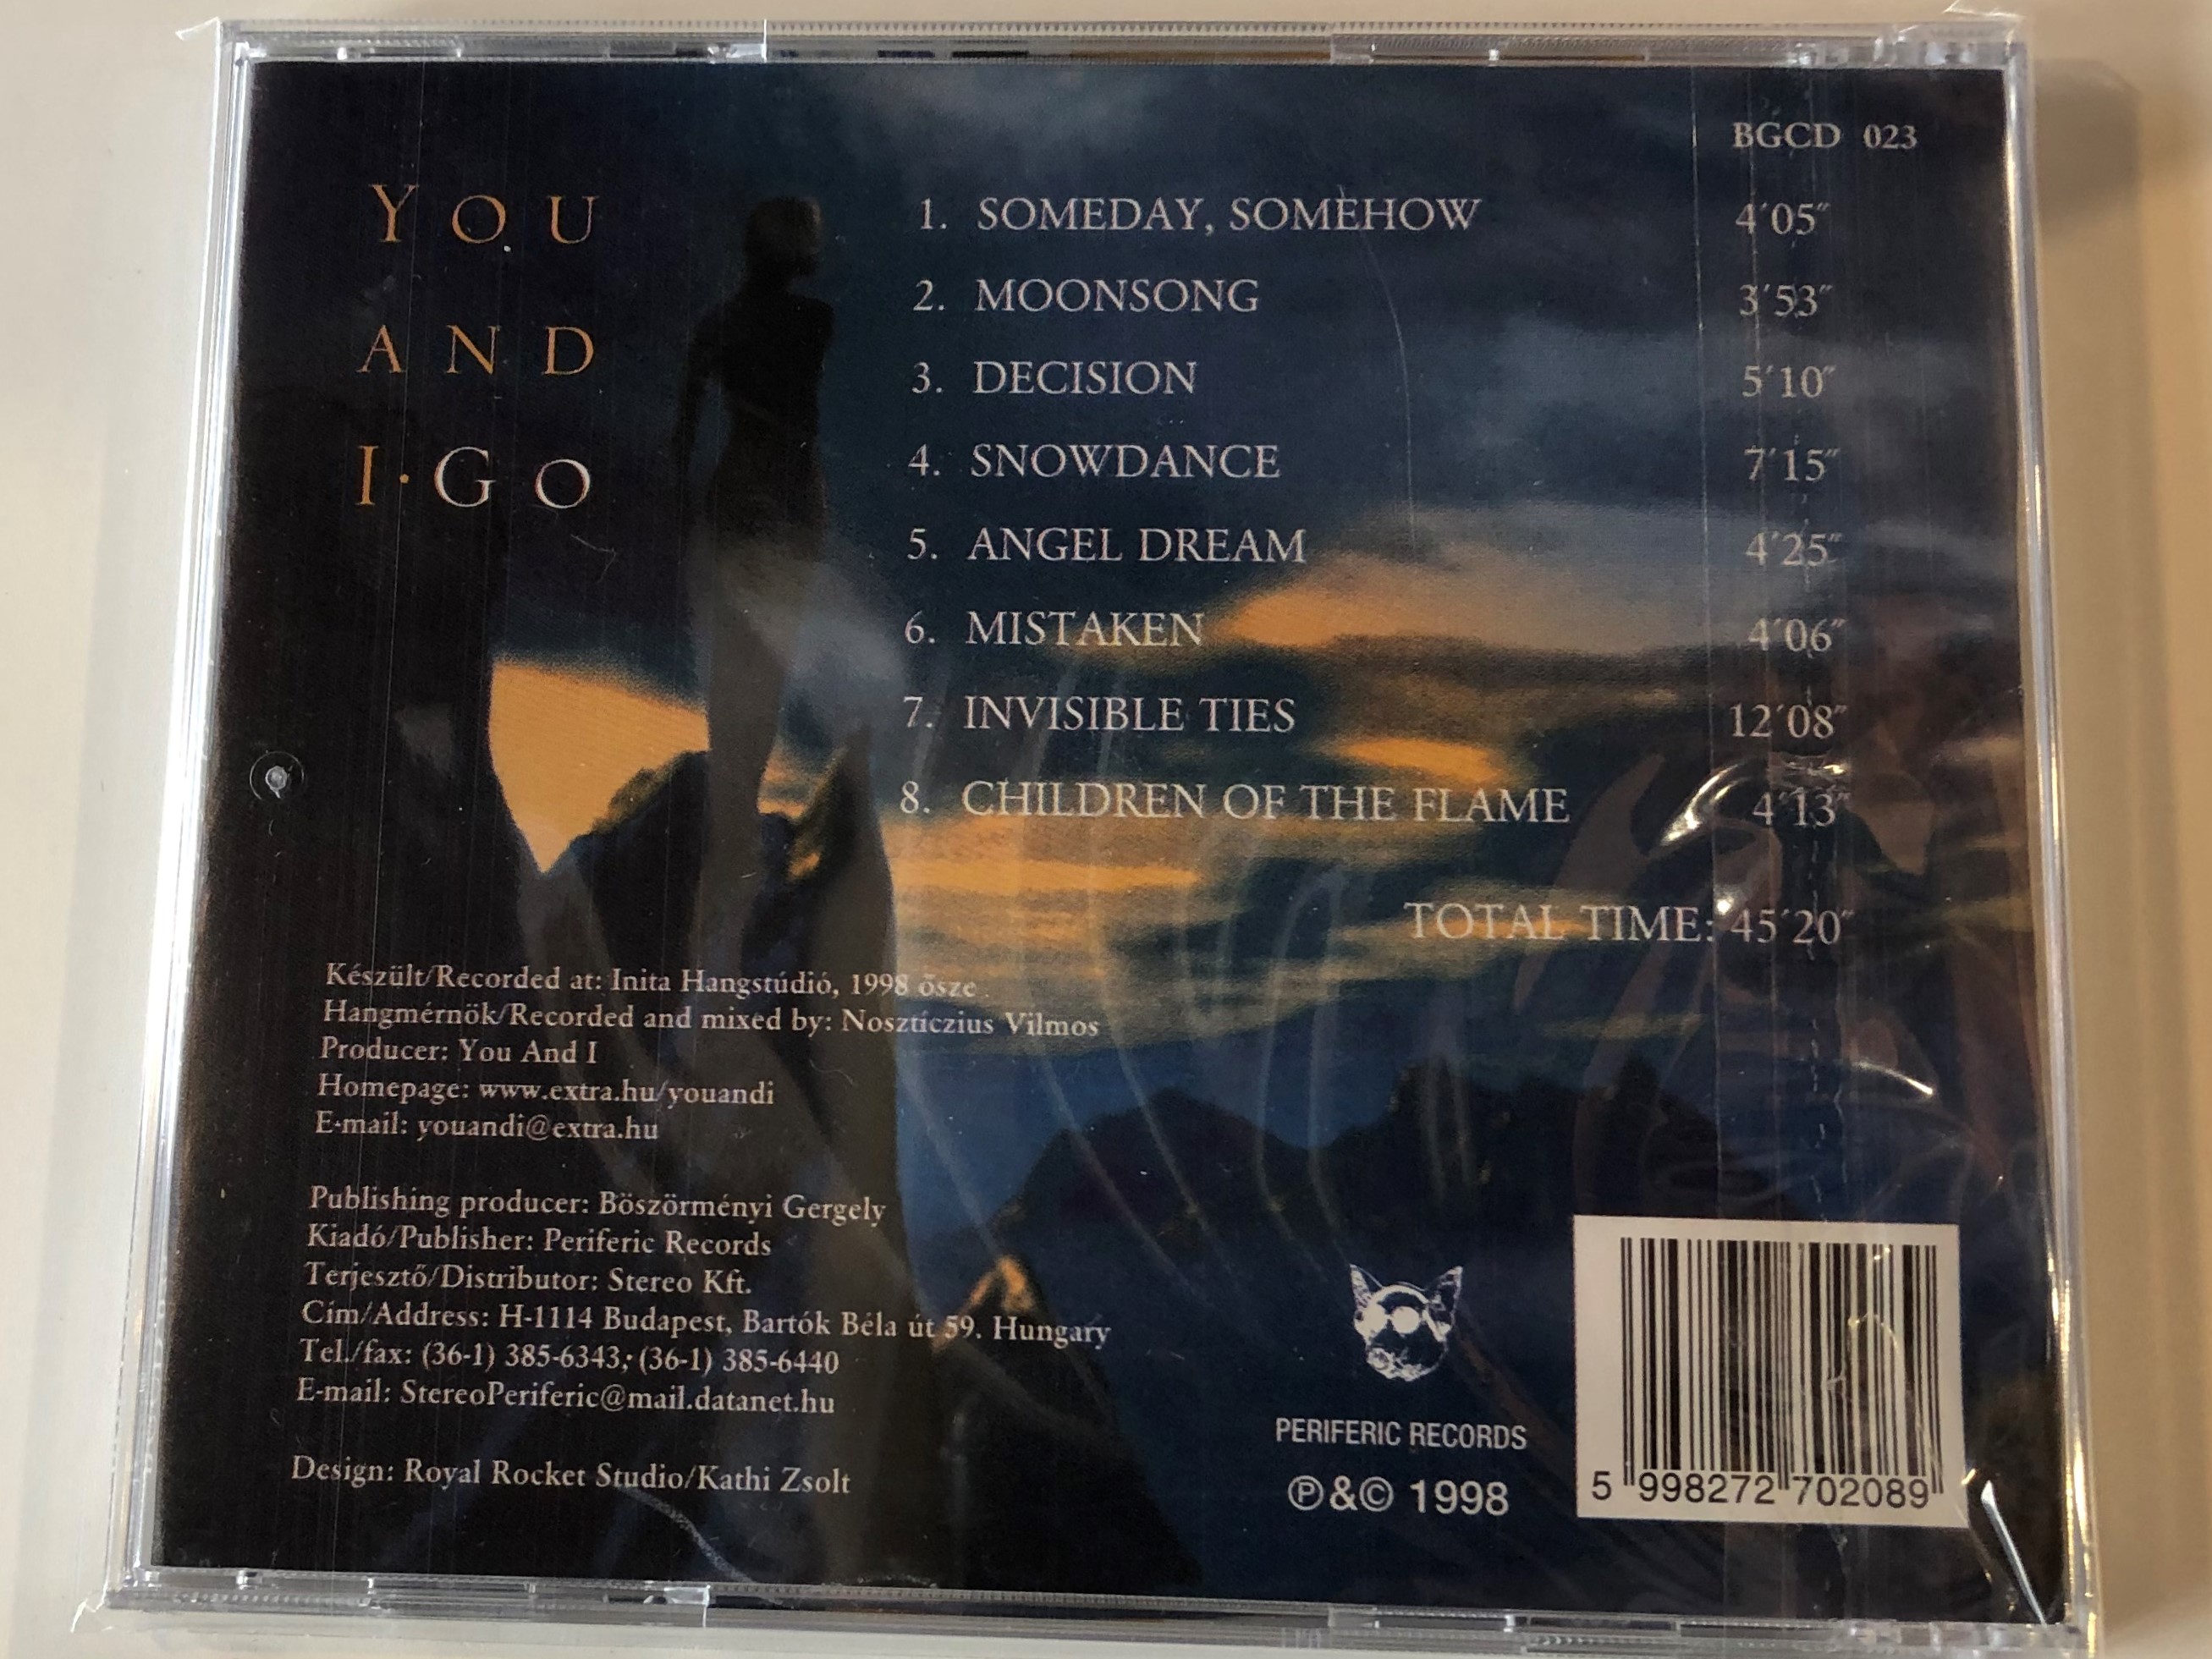 you-and-i-go-periferic-records-audio-cd-1998-bgcd-023-2-.jpg